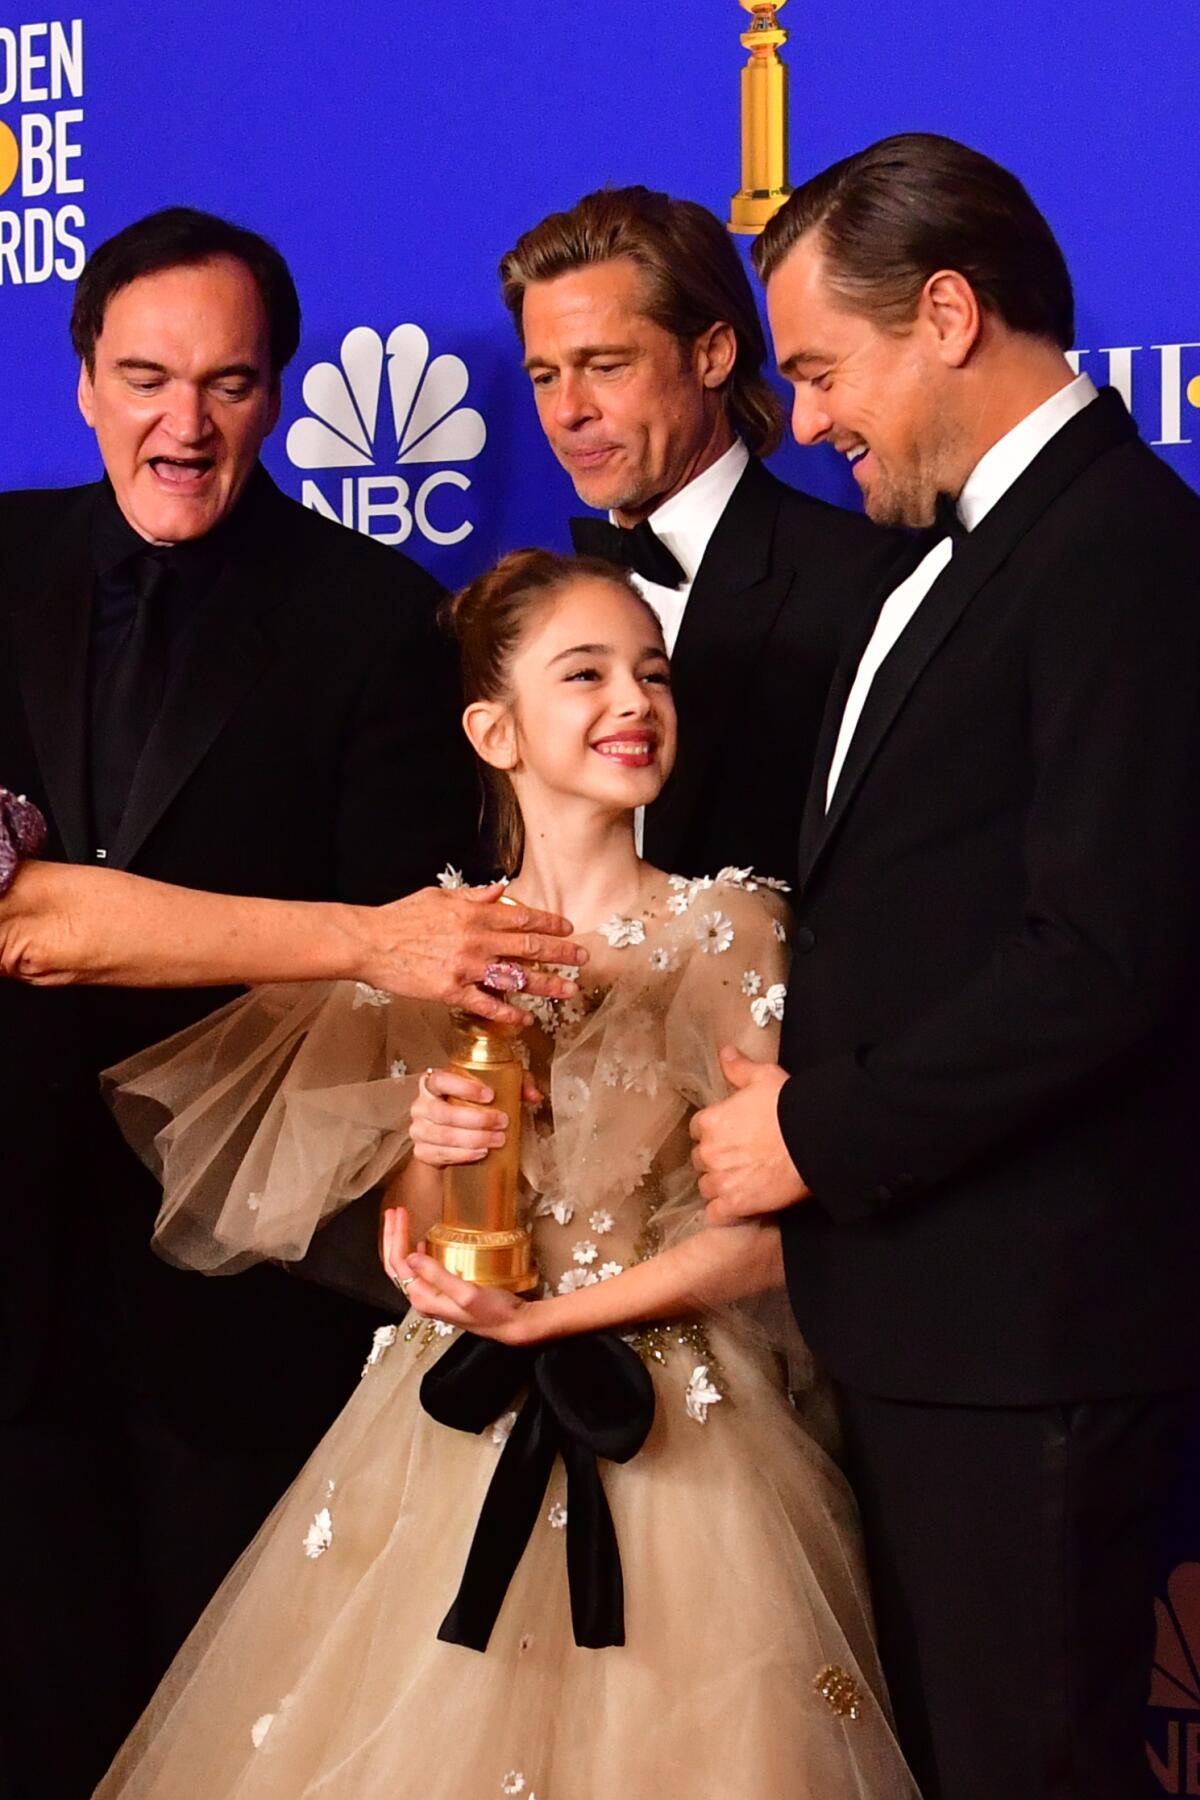 Quentin Tarantino, Brad Pitt, Leonardo DiCaprio, Julia Butters at the Golden Globes.